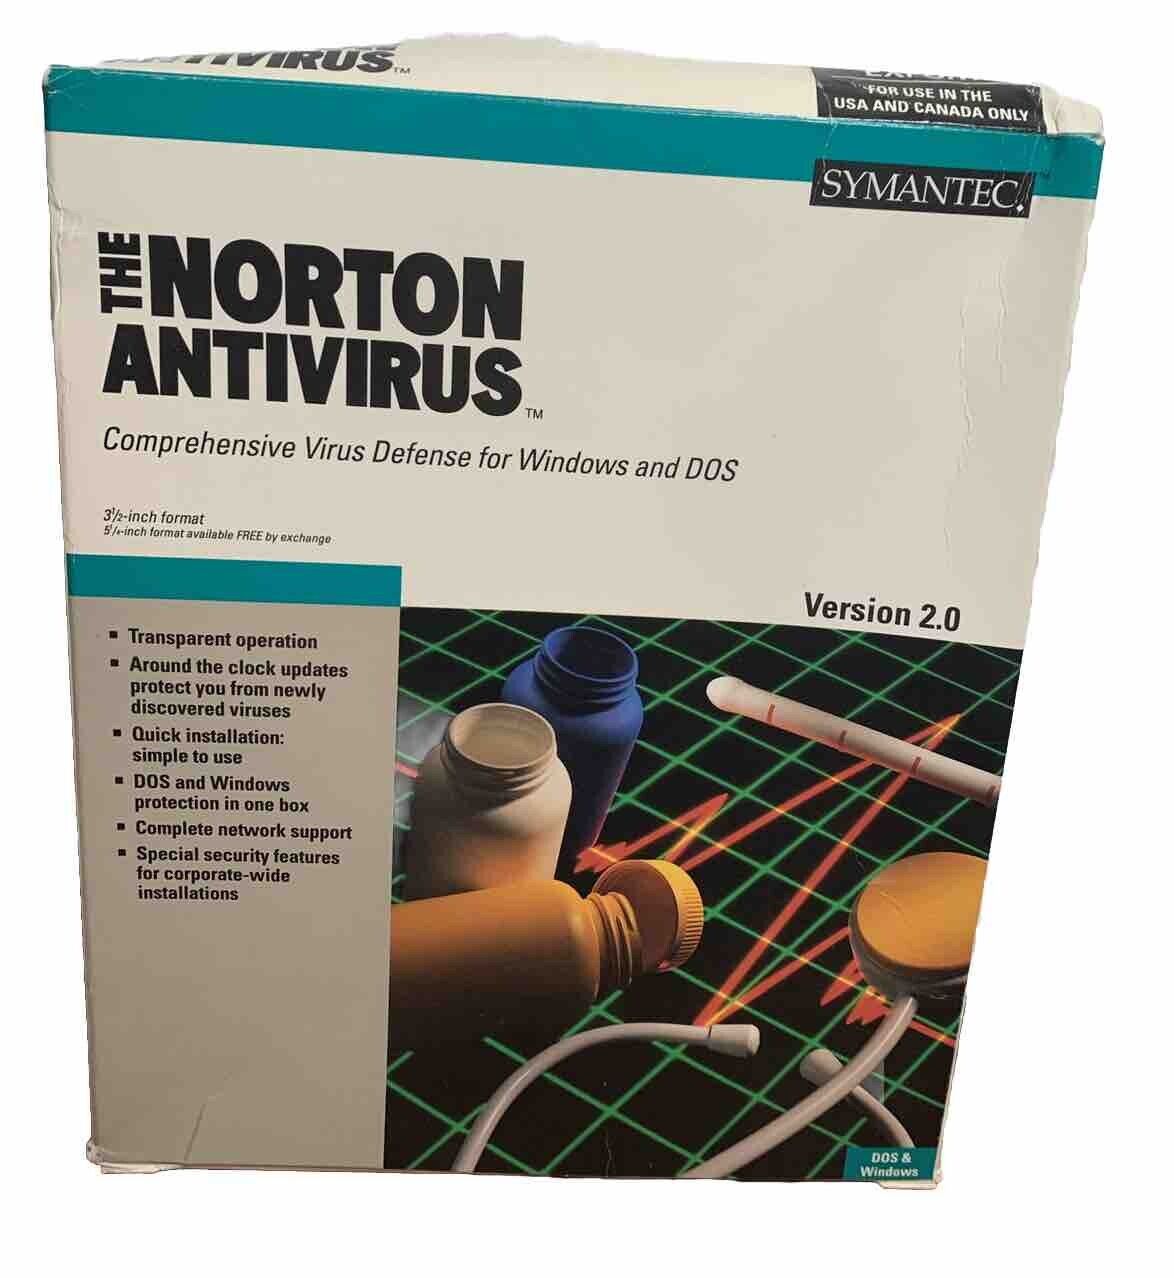 The Norton Antivirus Version 2.0 VINTAGE - RARE ITEM - COLLECTOR’s